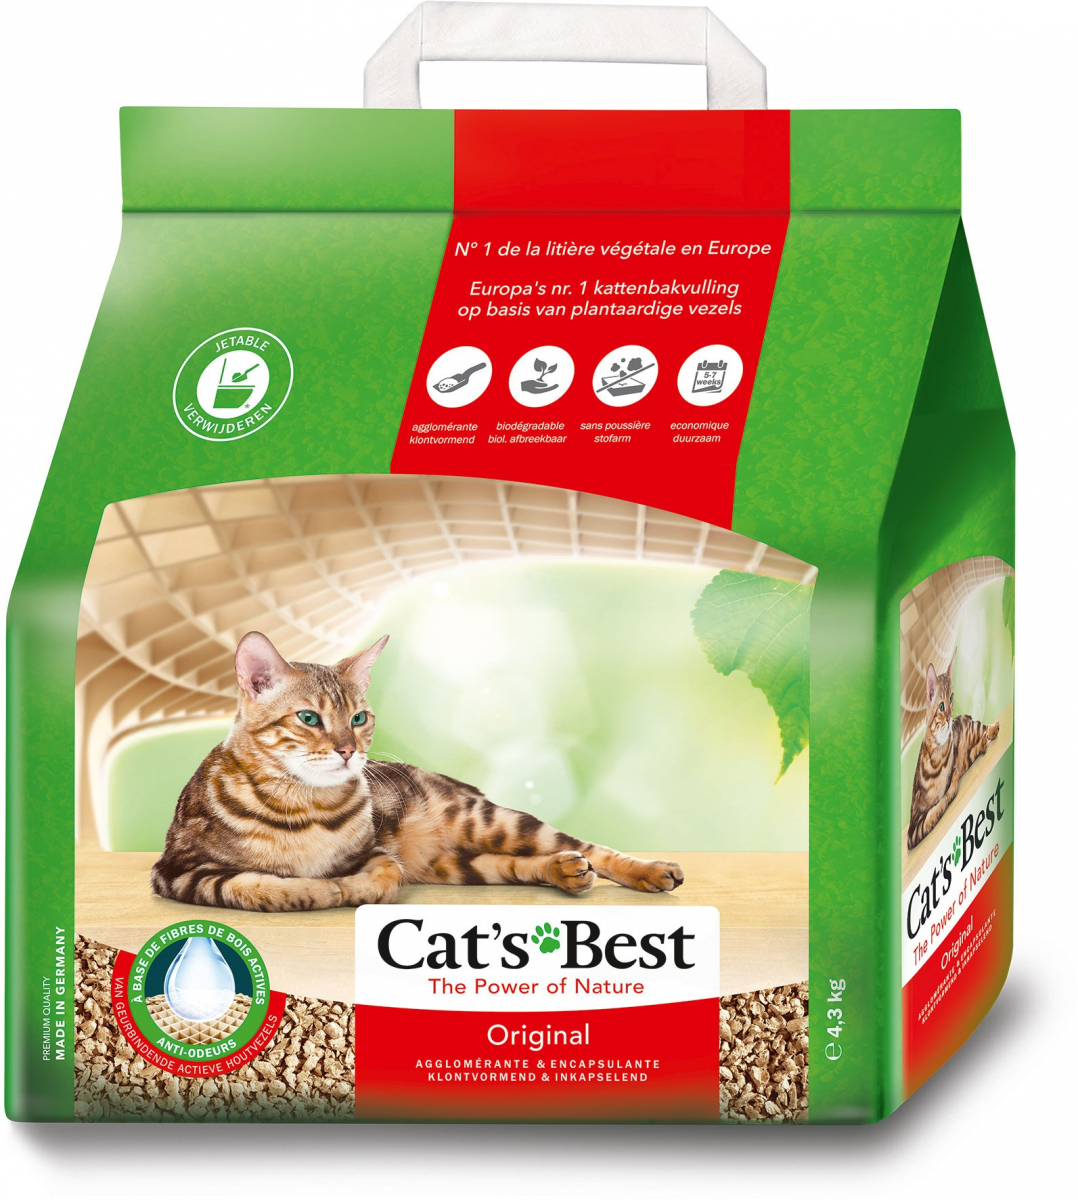 Cat’s Best Original - arena vegetal aglomerante para gatos